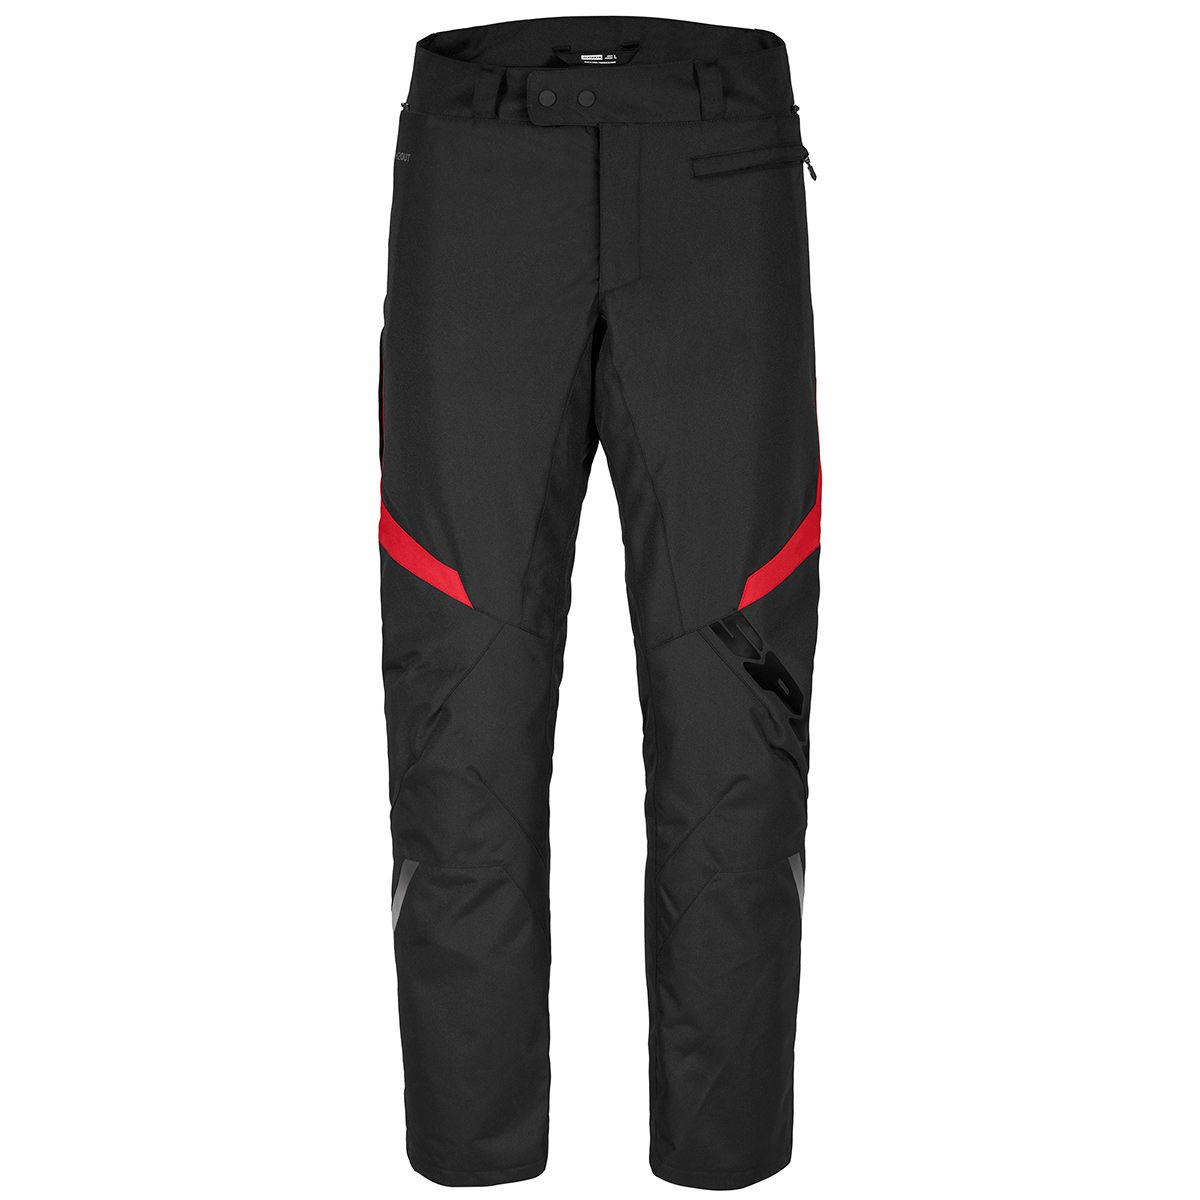 Image of Spidi Sportmaster Pants Black Red Size L ID 8030161478211